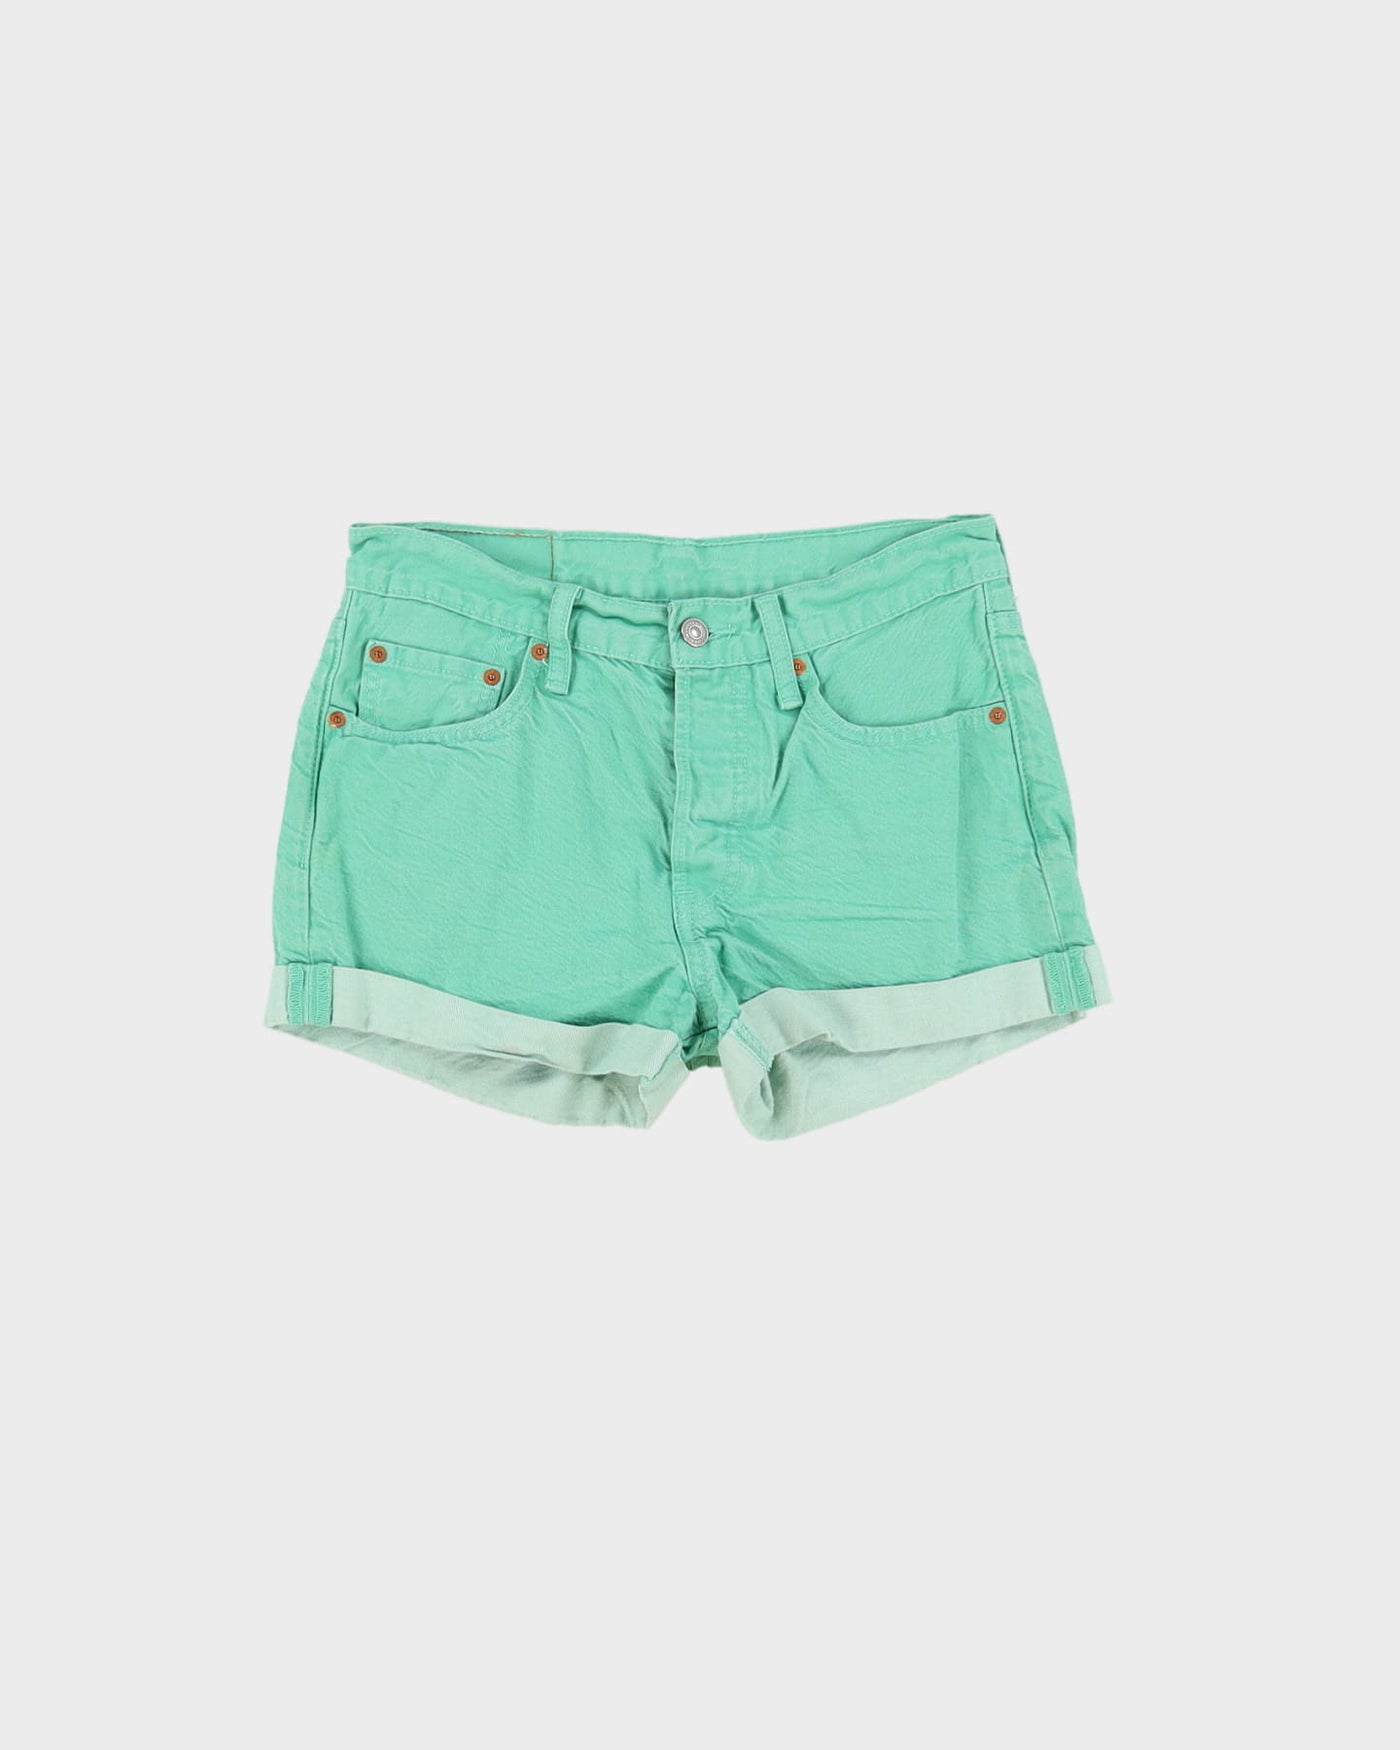 Vintage Levi's Green Denim Shorts - W30